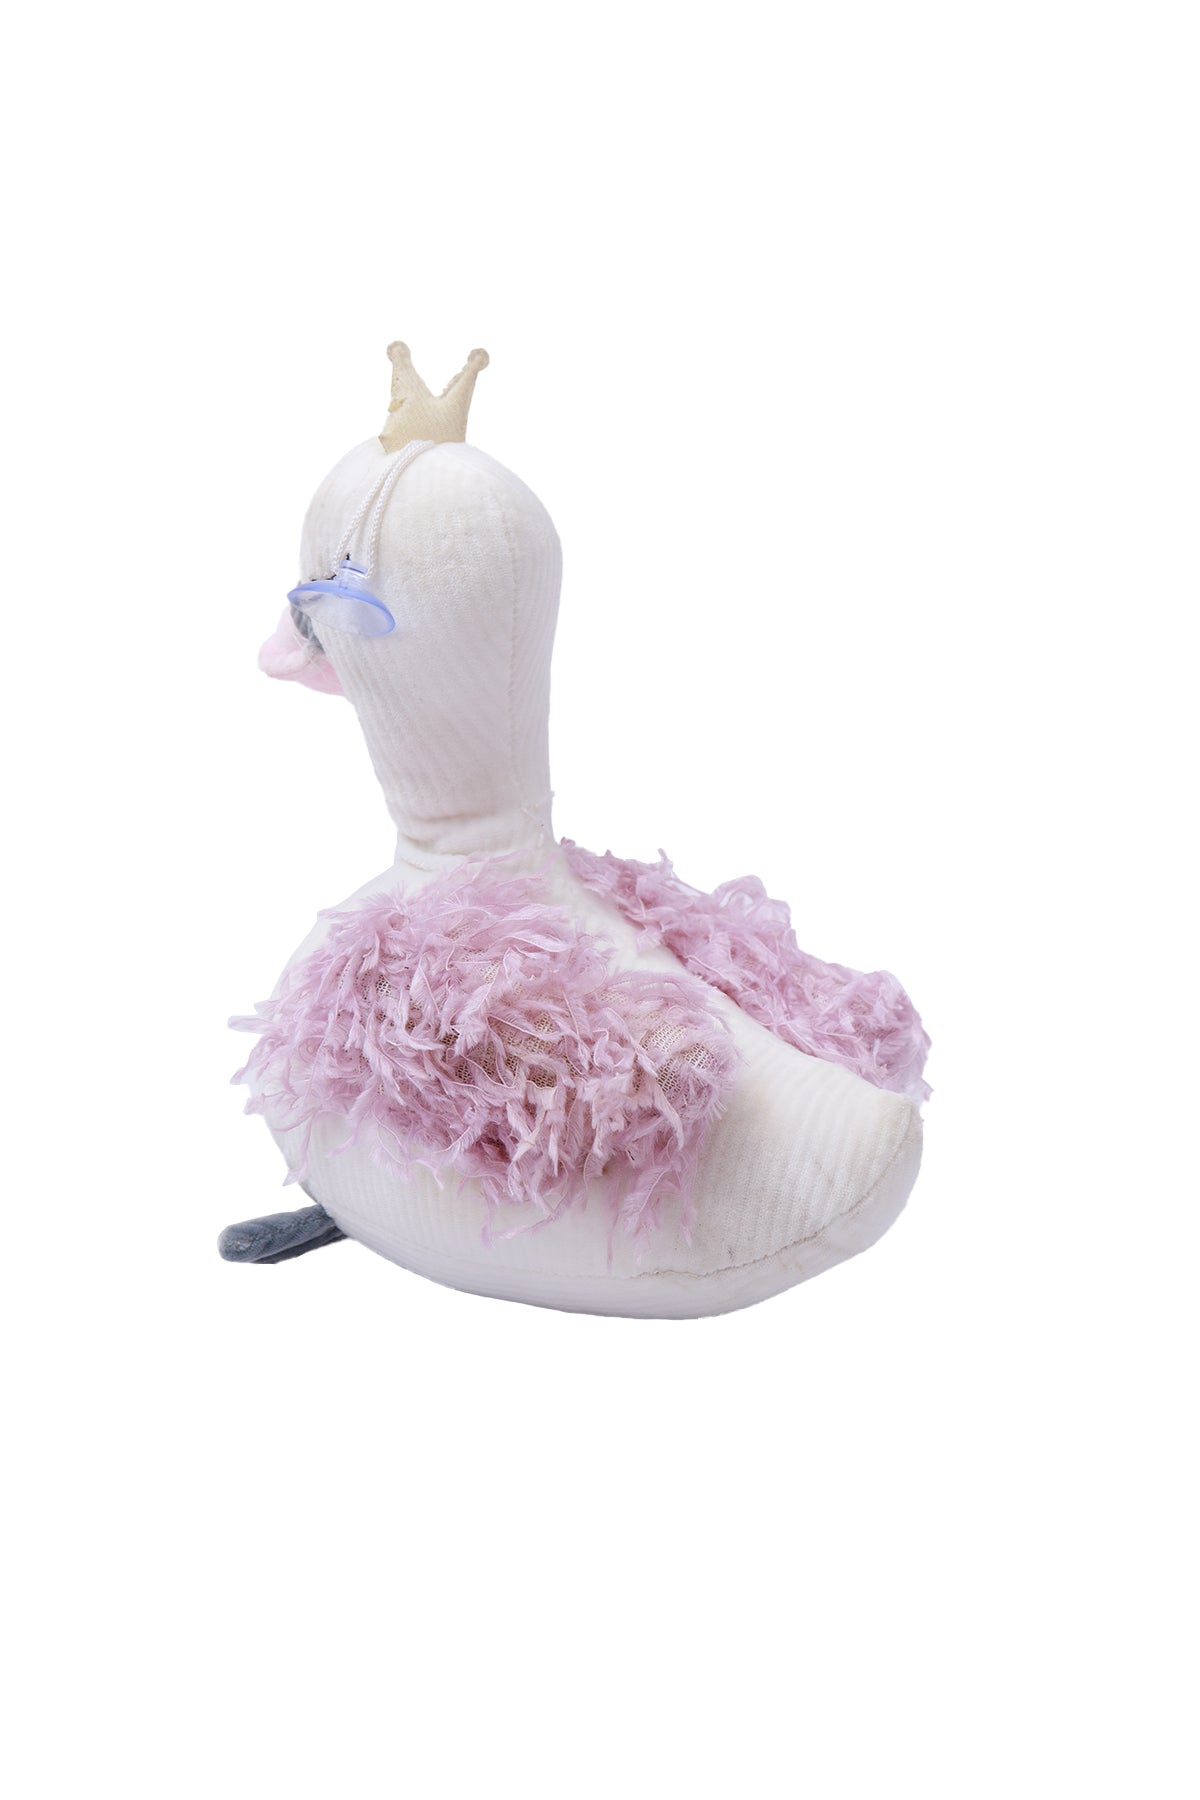 Stuffed Soft Swan Toy